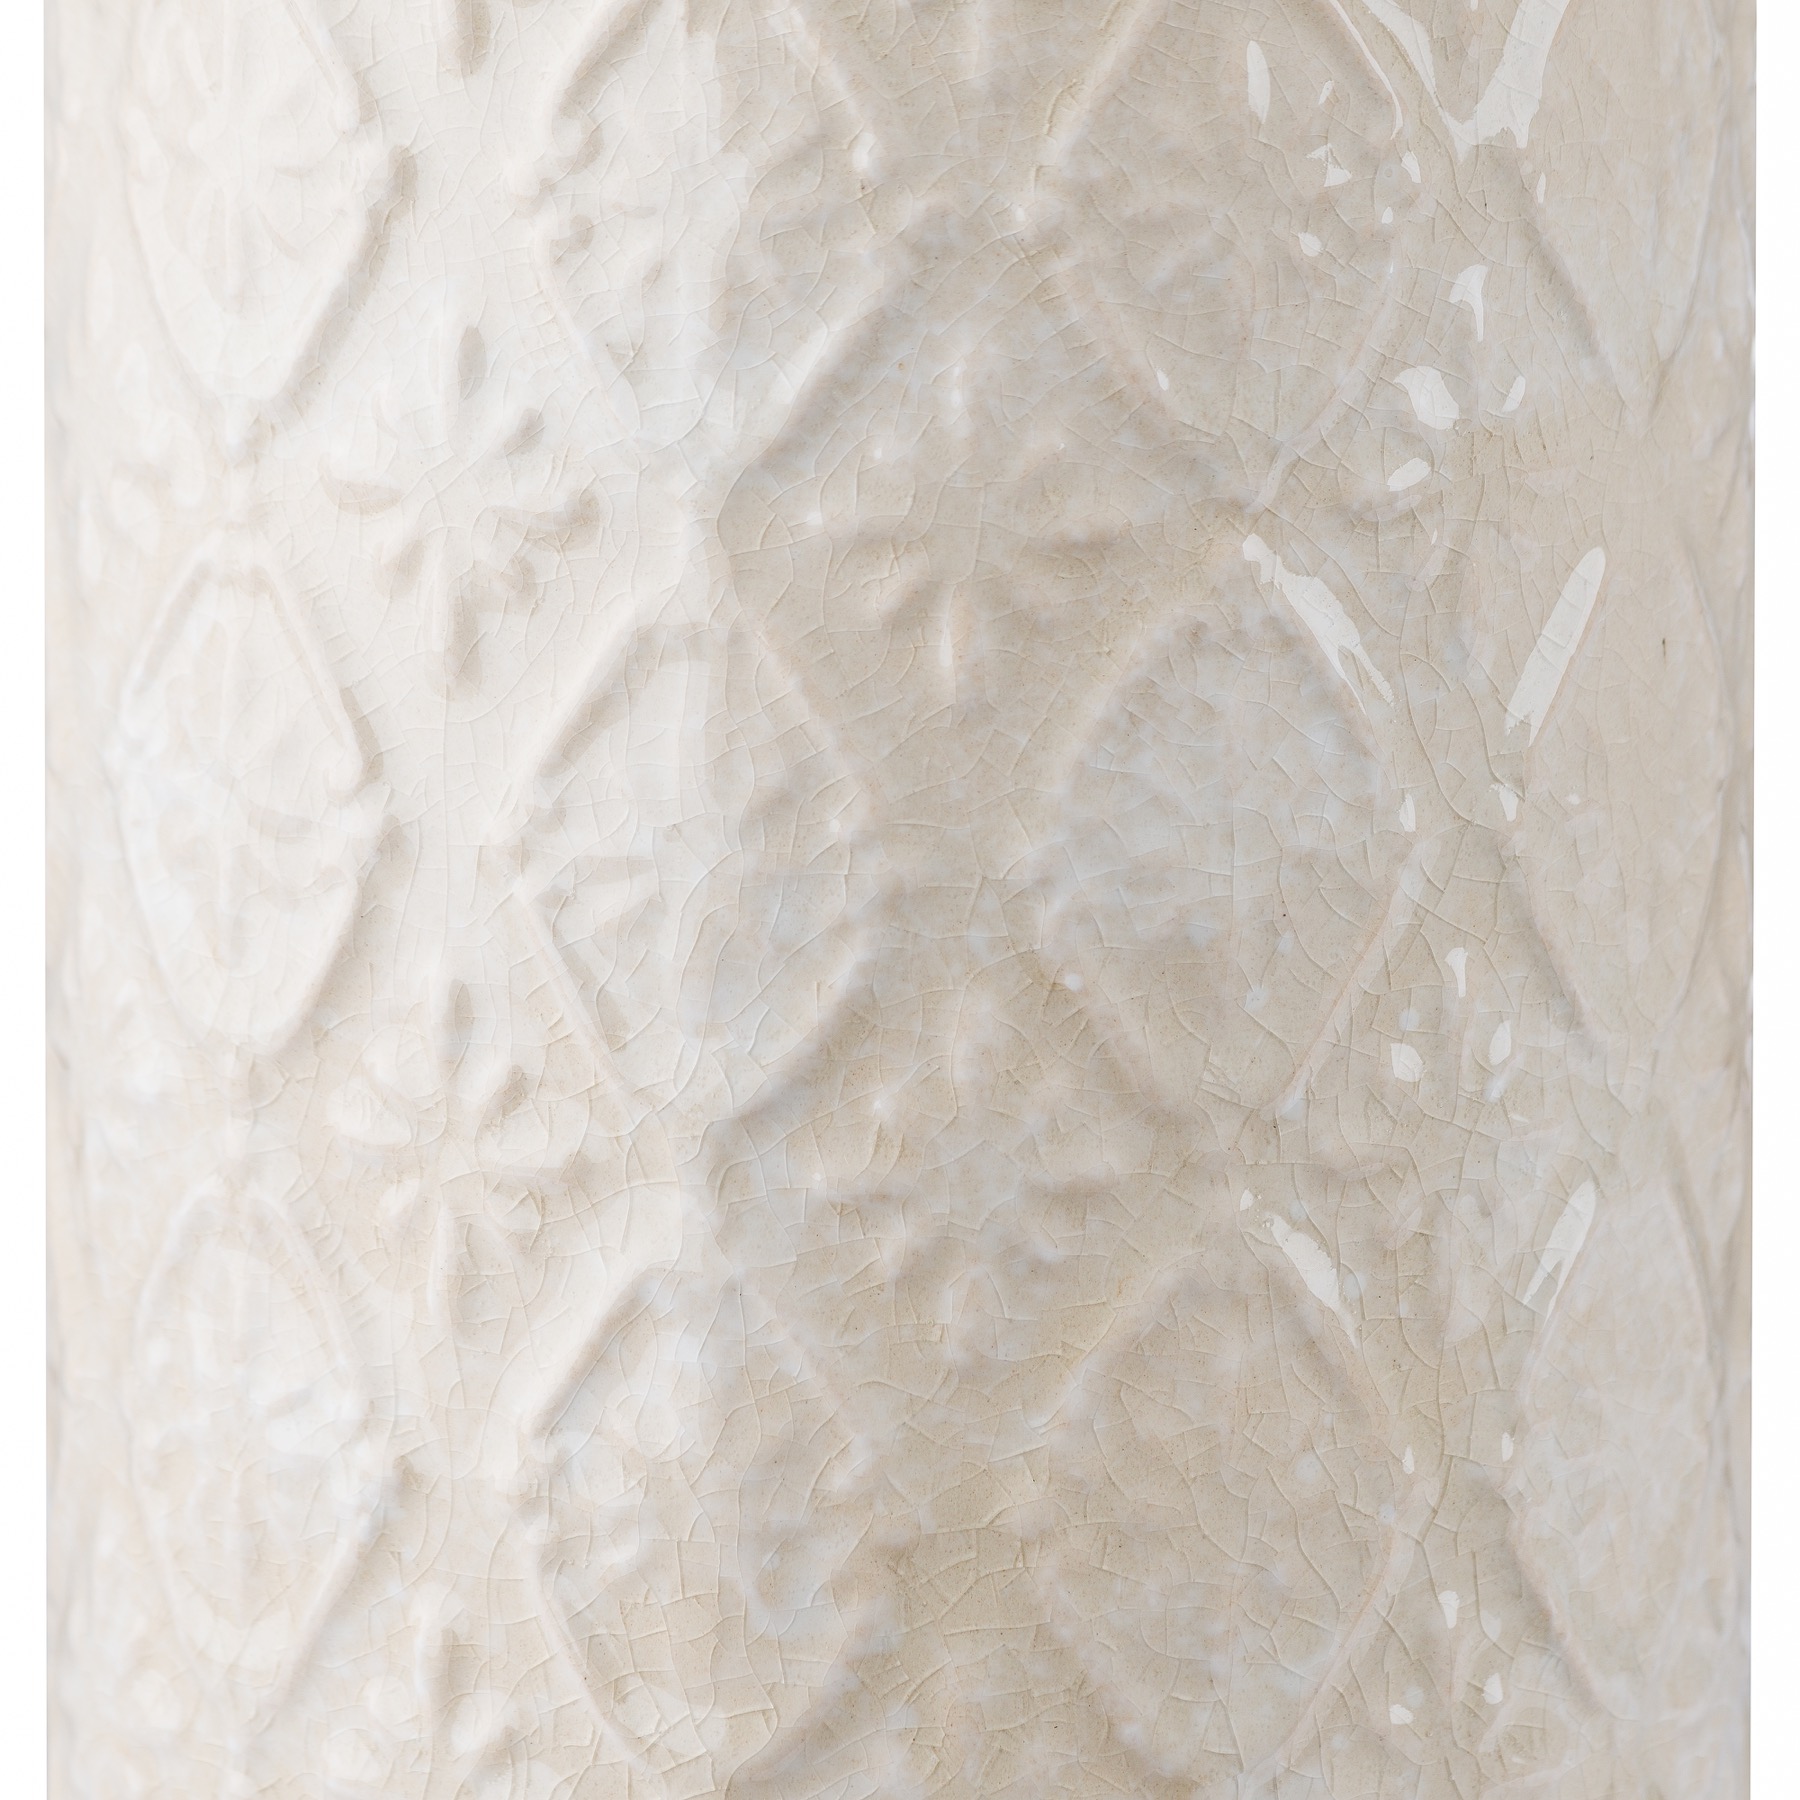 Seville Collection Olpe Vase - Image 2